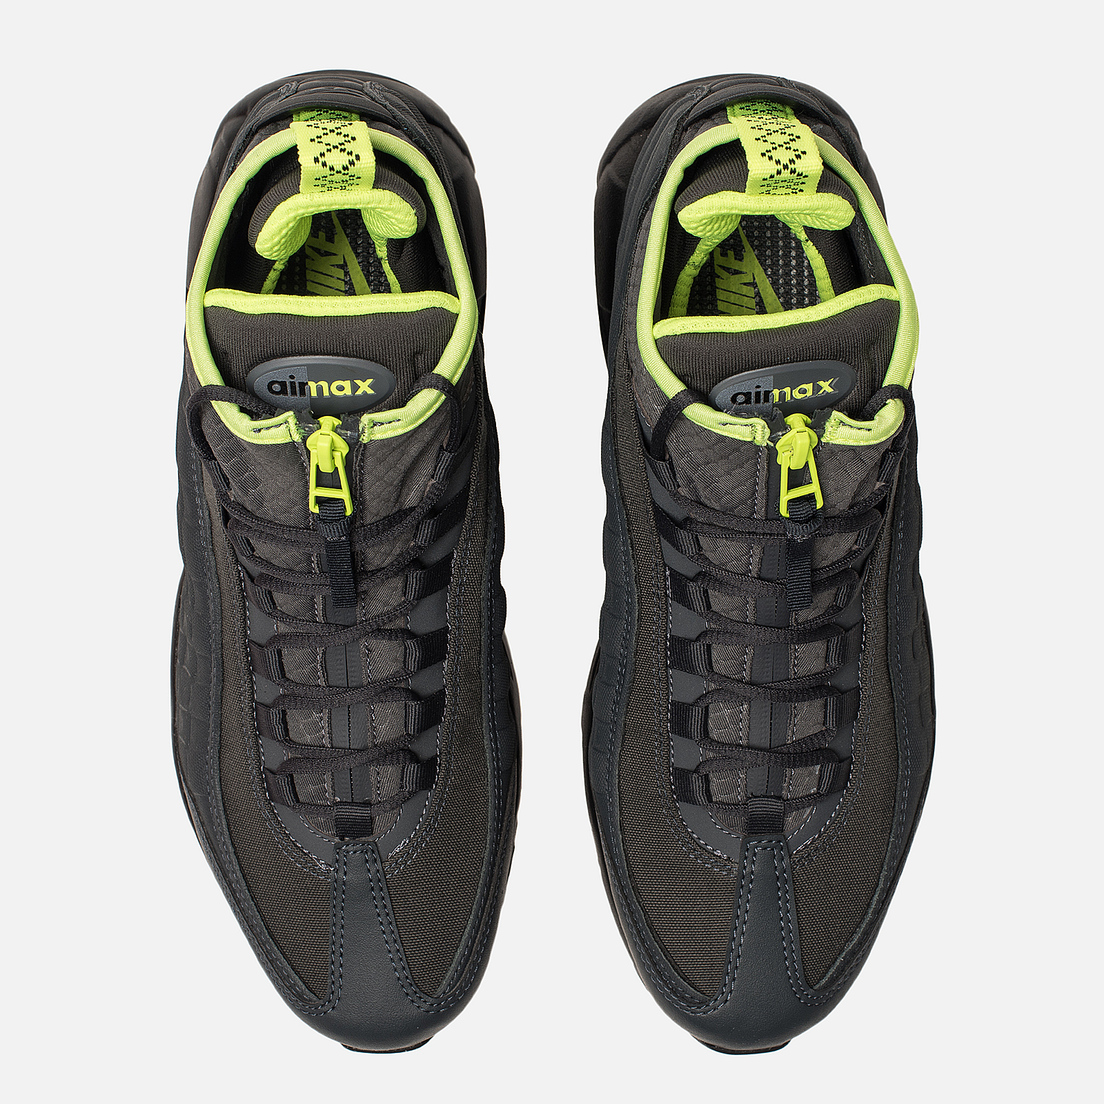 Nike Мужские зимние кроссовки Air Max 95 Sneakerboot